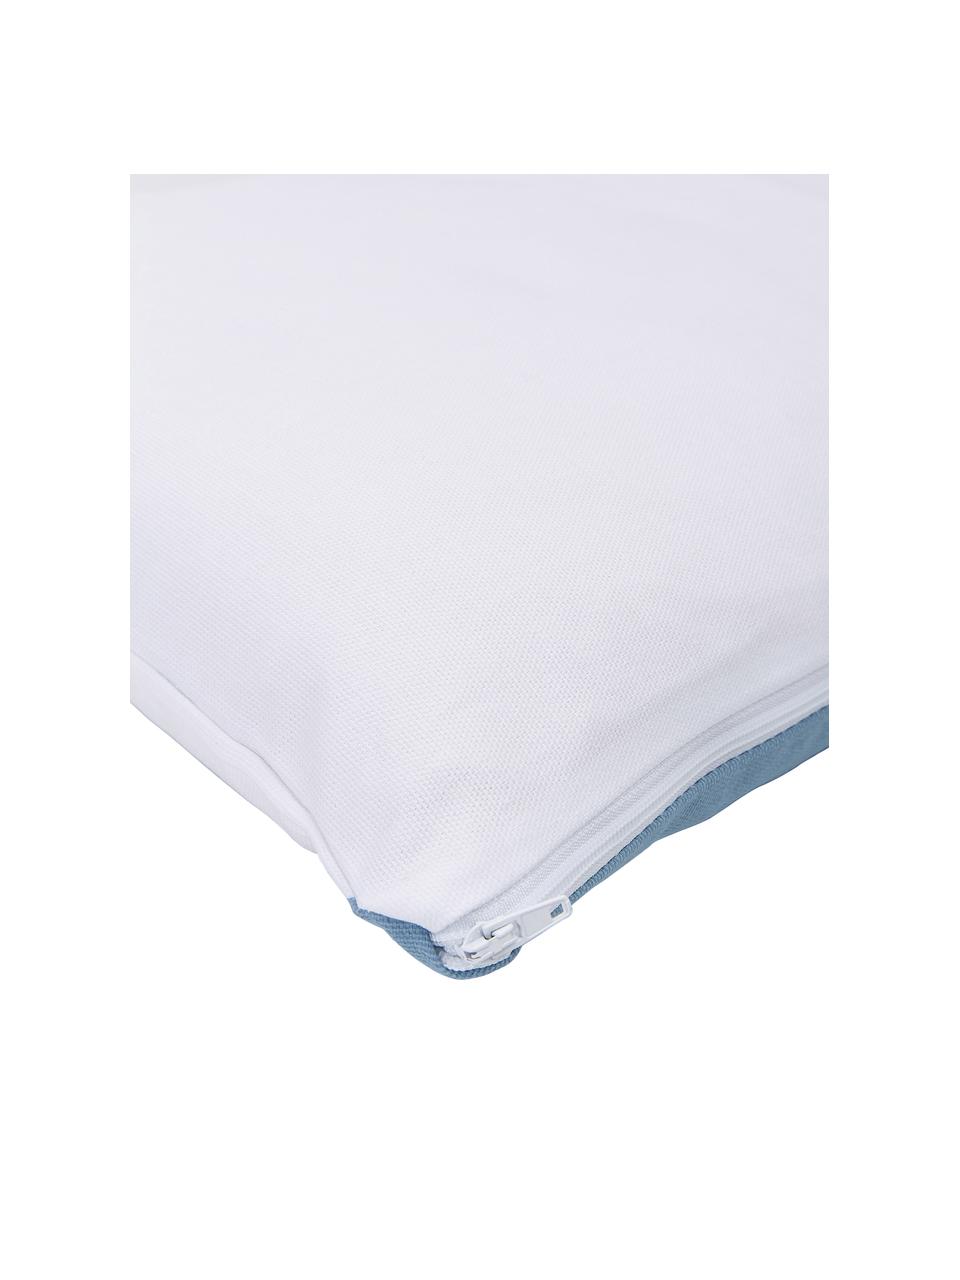 Gestreifte Kissenhülle Ren in Hellblau/White, 100% Baumwolle, Weiß, Hellblau, 30 x 50 cm